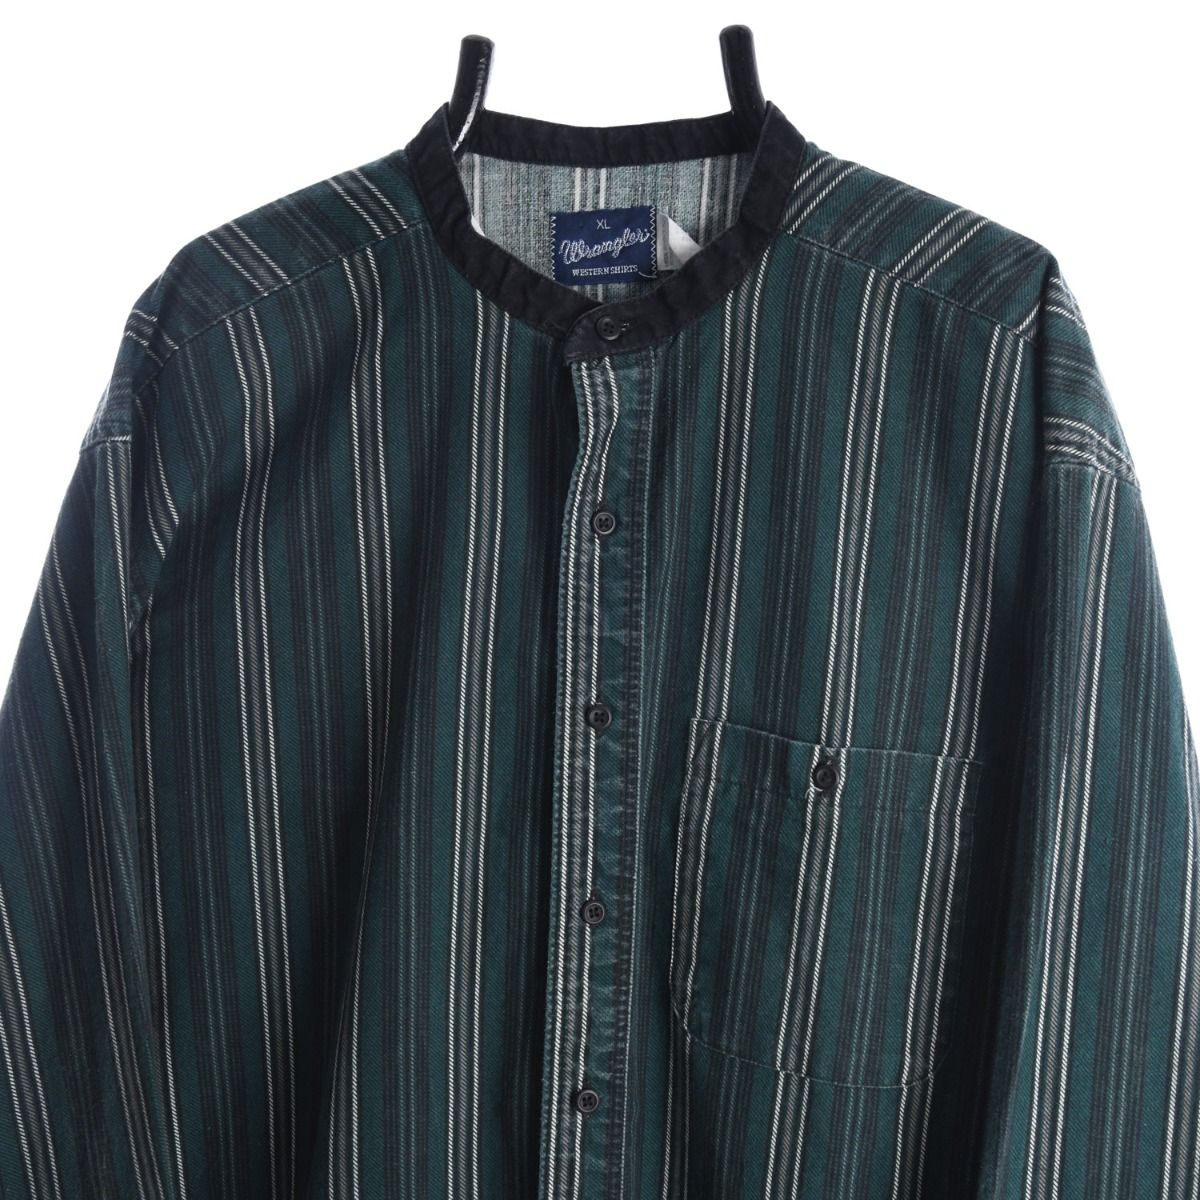 Wrangler 1980s Collarless Cotton Shirt